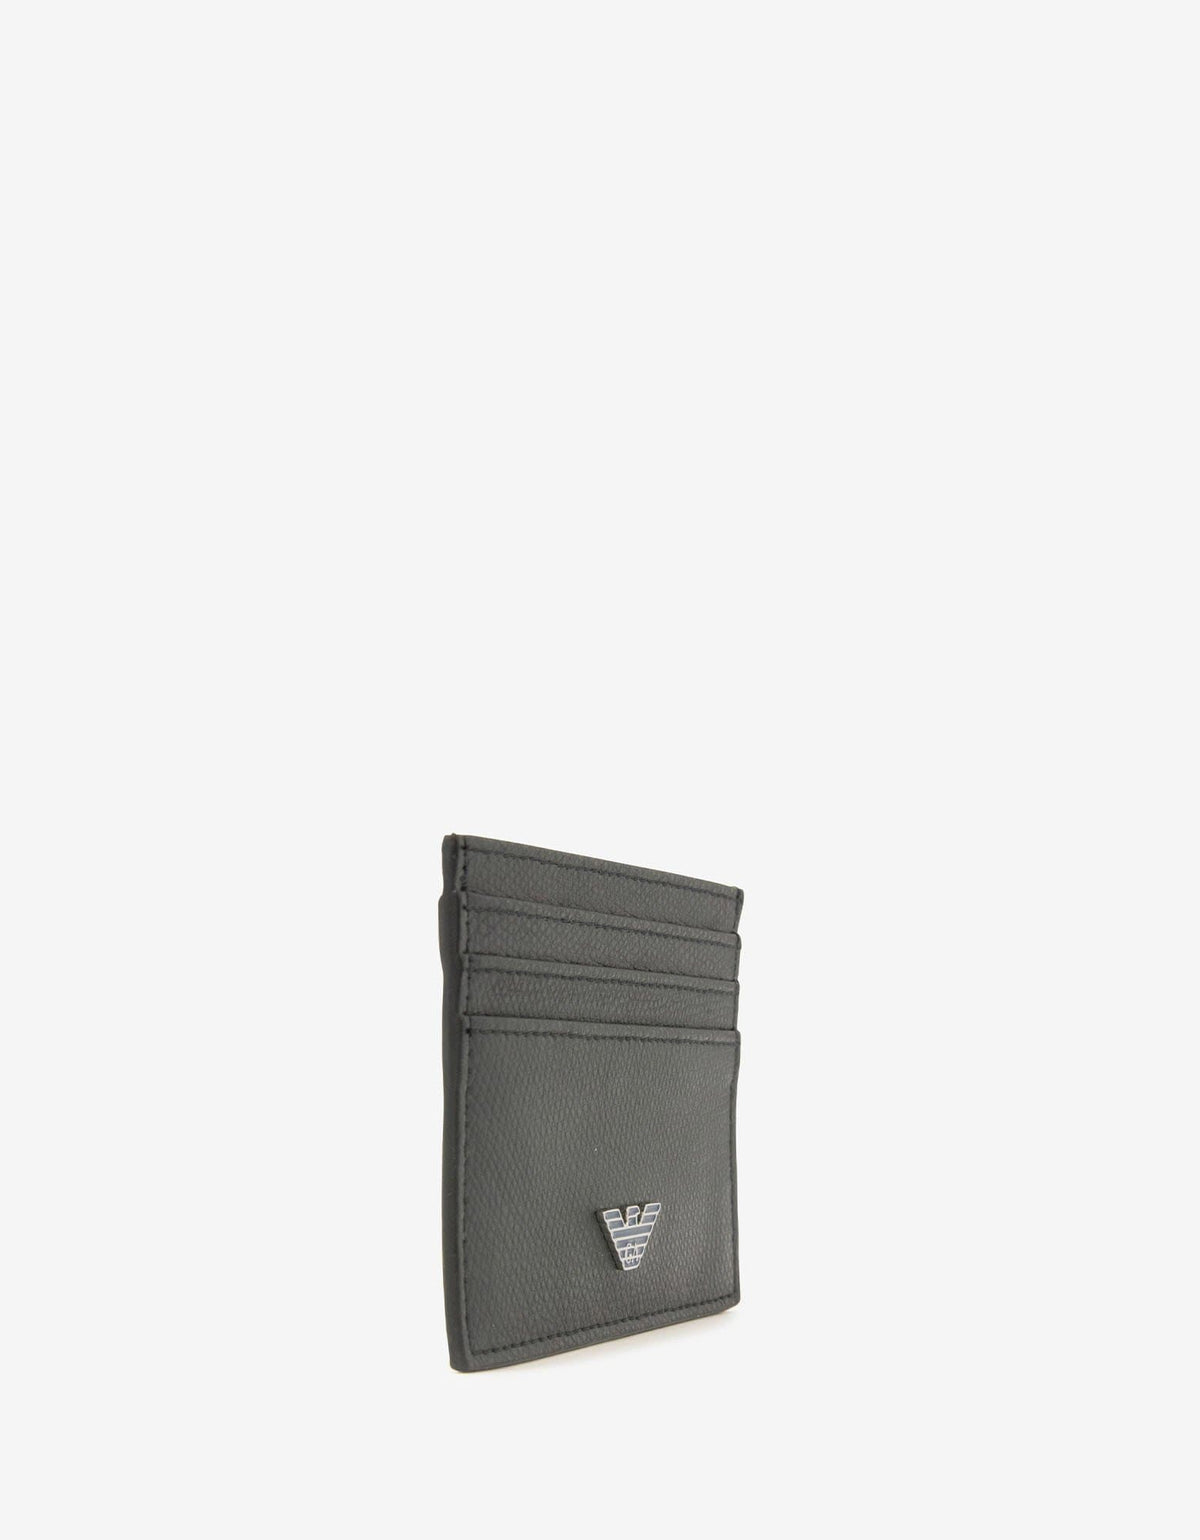 Emporio Armani Black & Blue Leather Card Holder